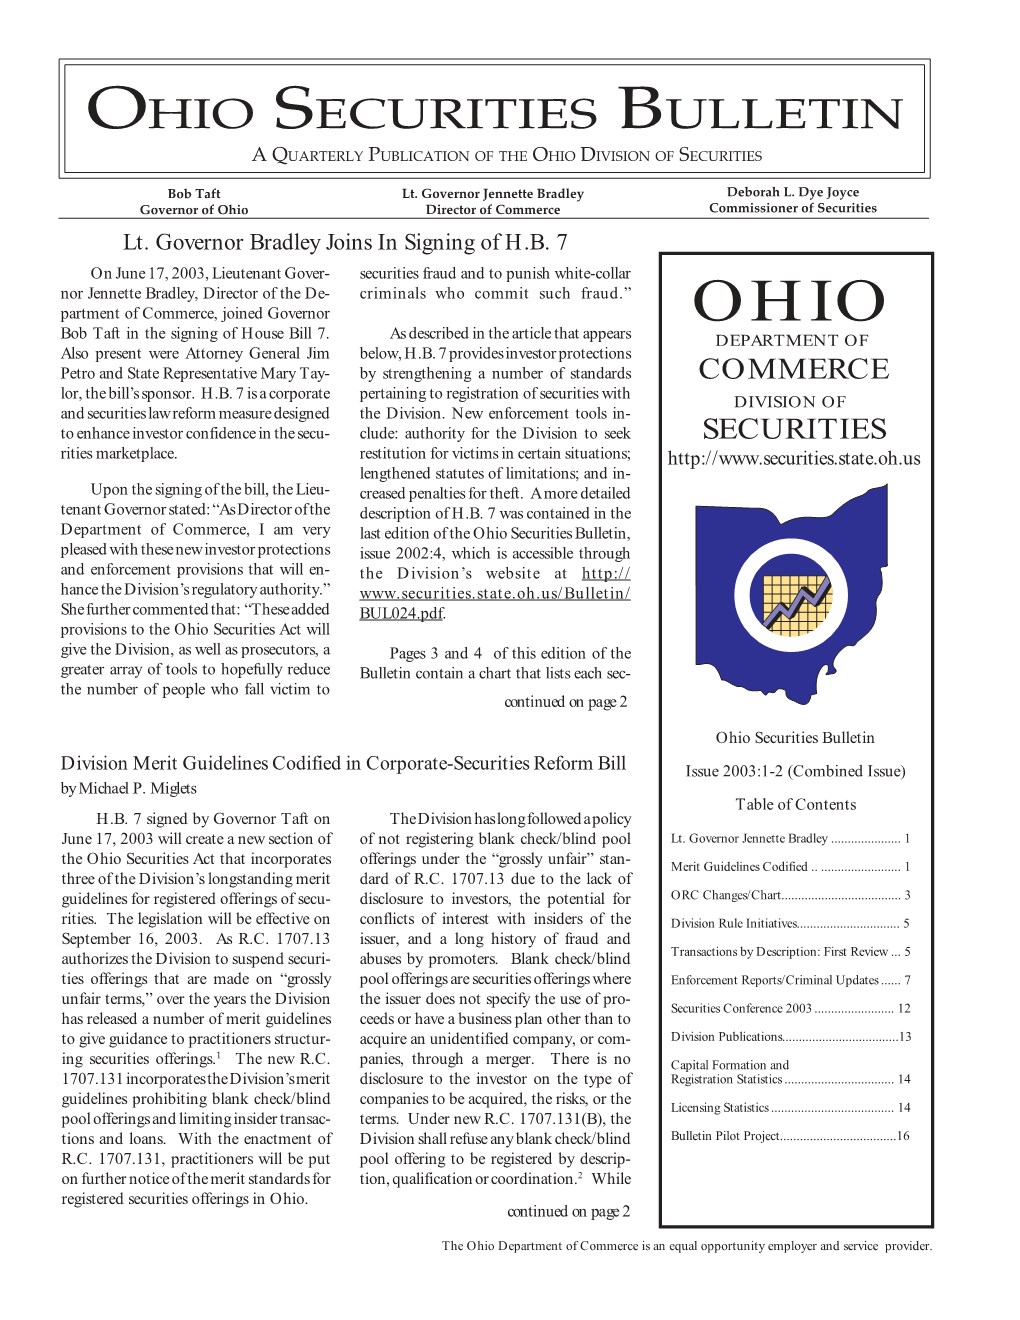 Ohio Securities Bulletin a Quarterly Publication of the Ohio Division of Securities